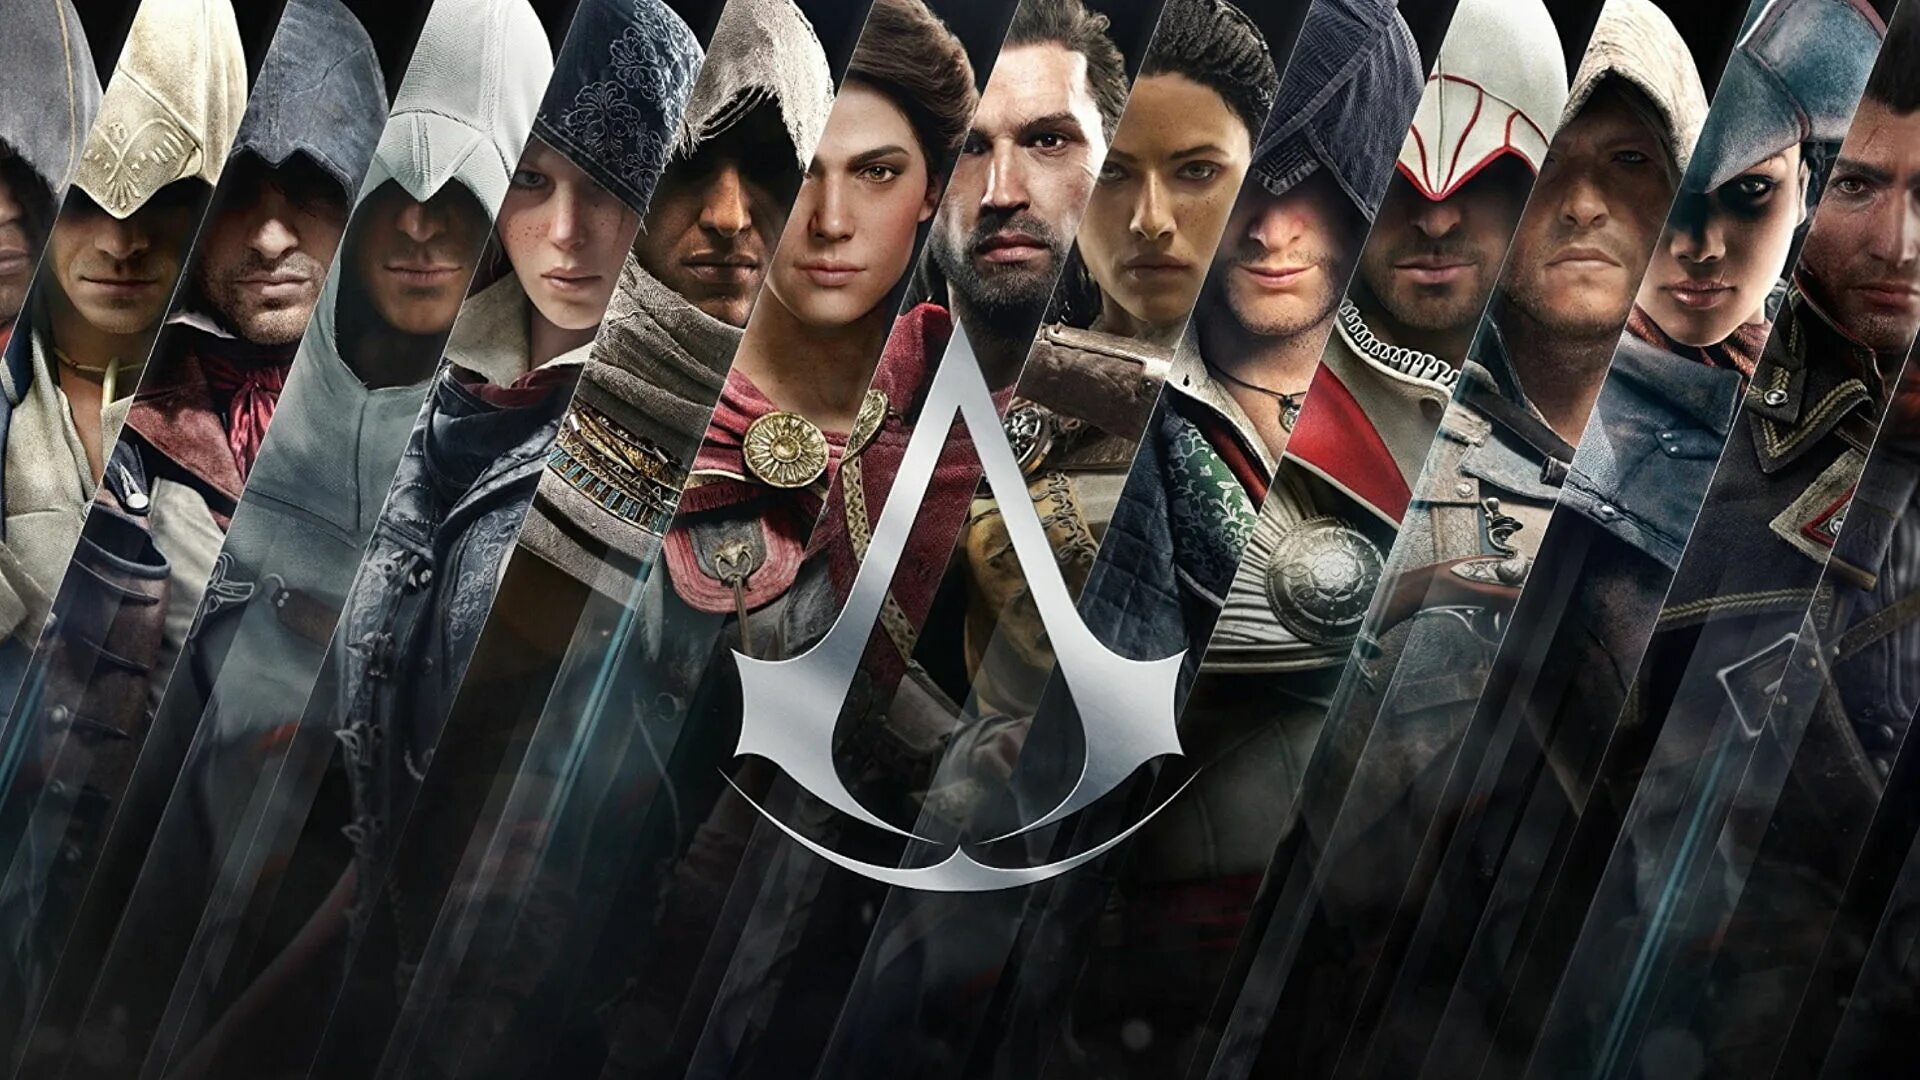 Assassins creed все части список. Assassin s Creed. Юбисофт ассасин Крид.